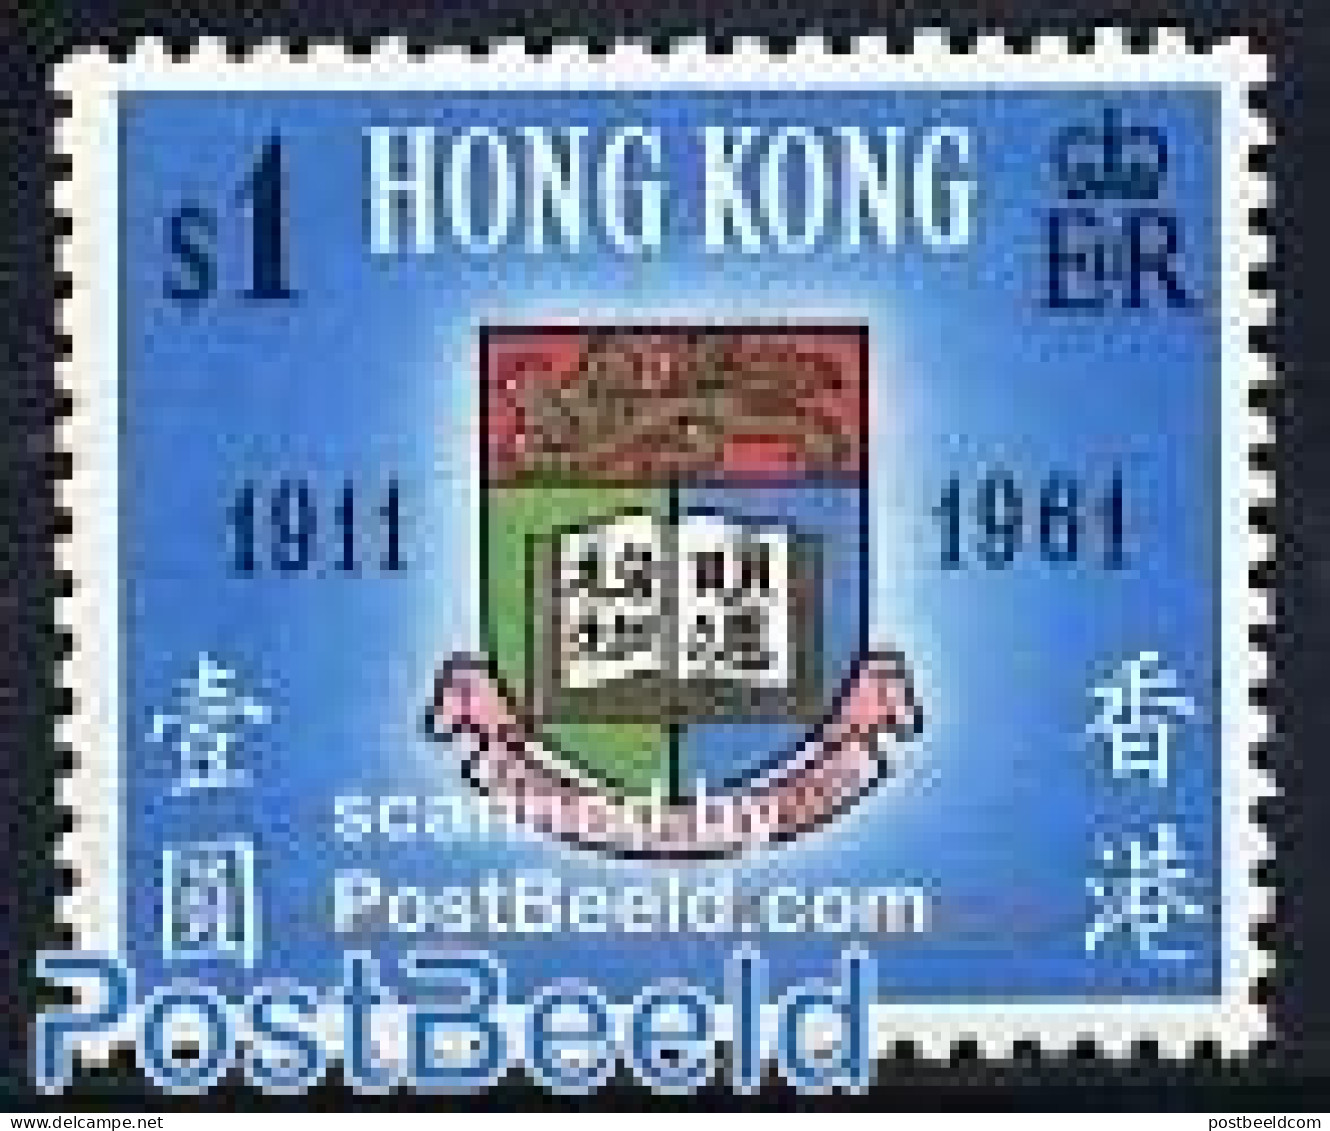 Hong Kong 1961 University 50th Anniversary 1v, Mint NH, History - Science - Coat Of Arms - Education - Ungebraucht